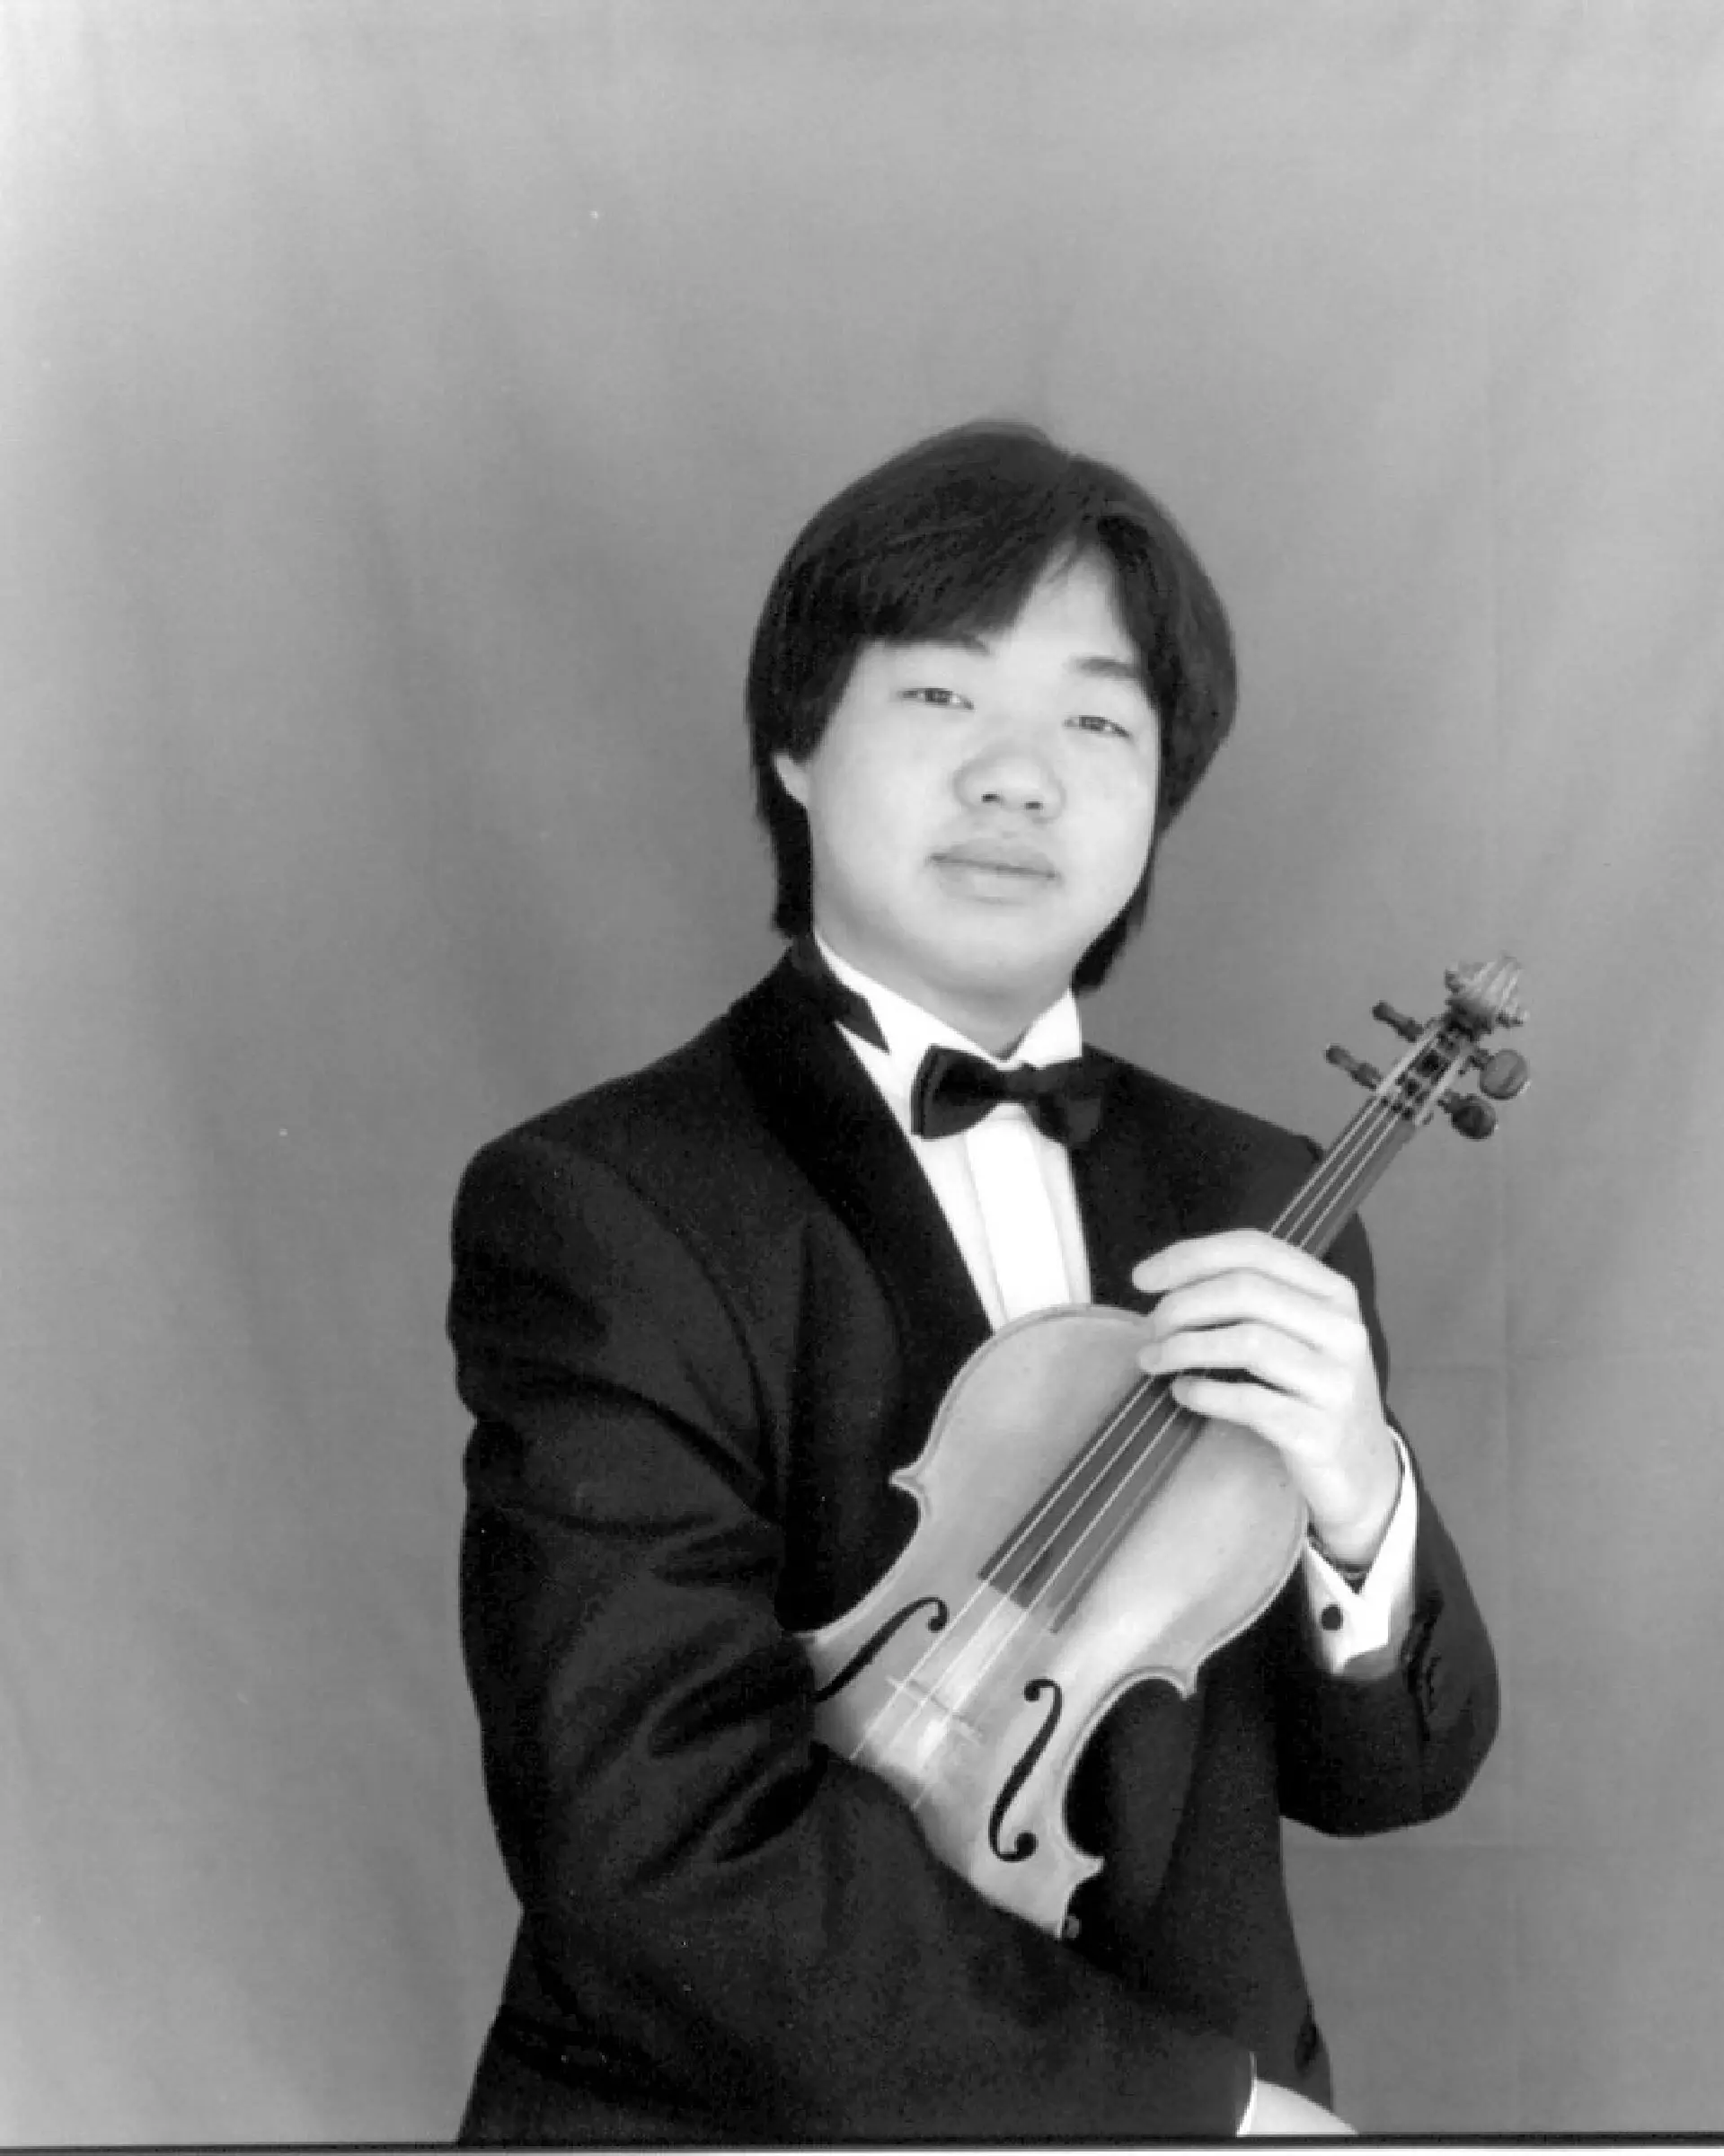 ning feng violin - What violin does Ning Feng play